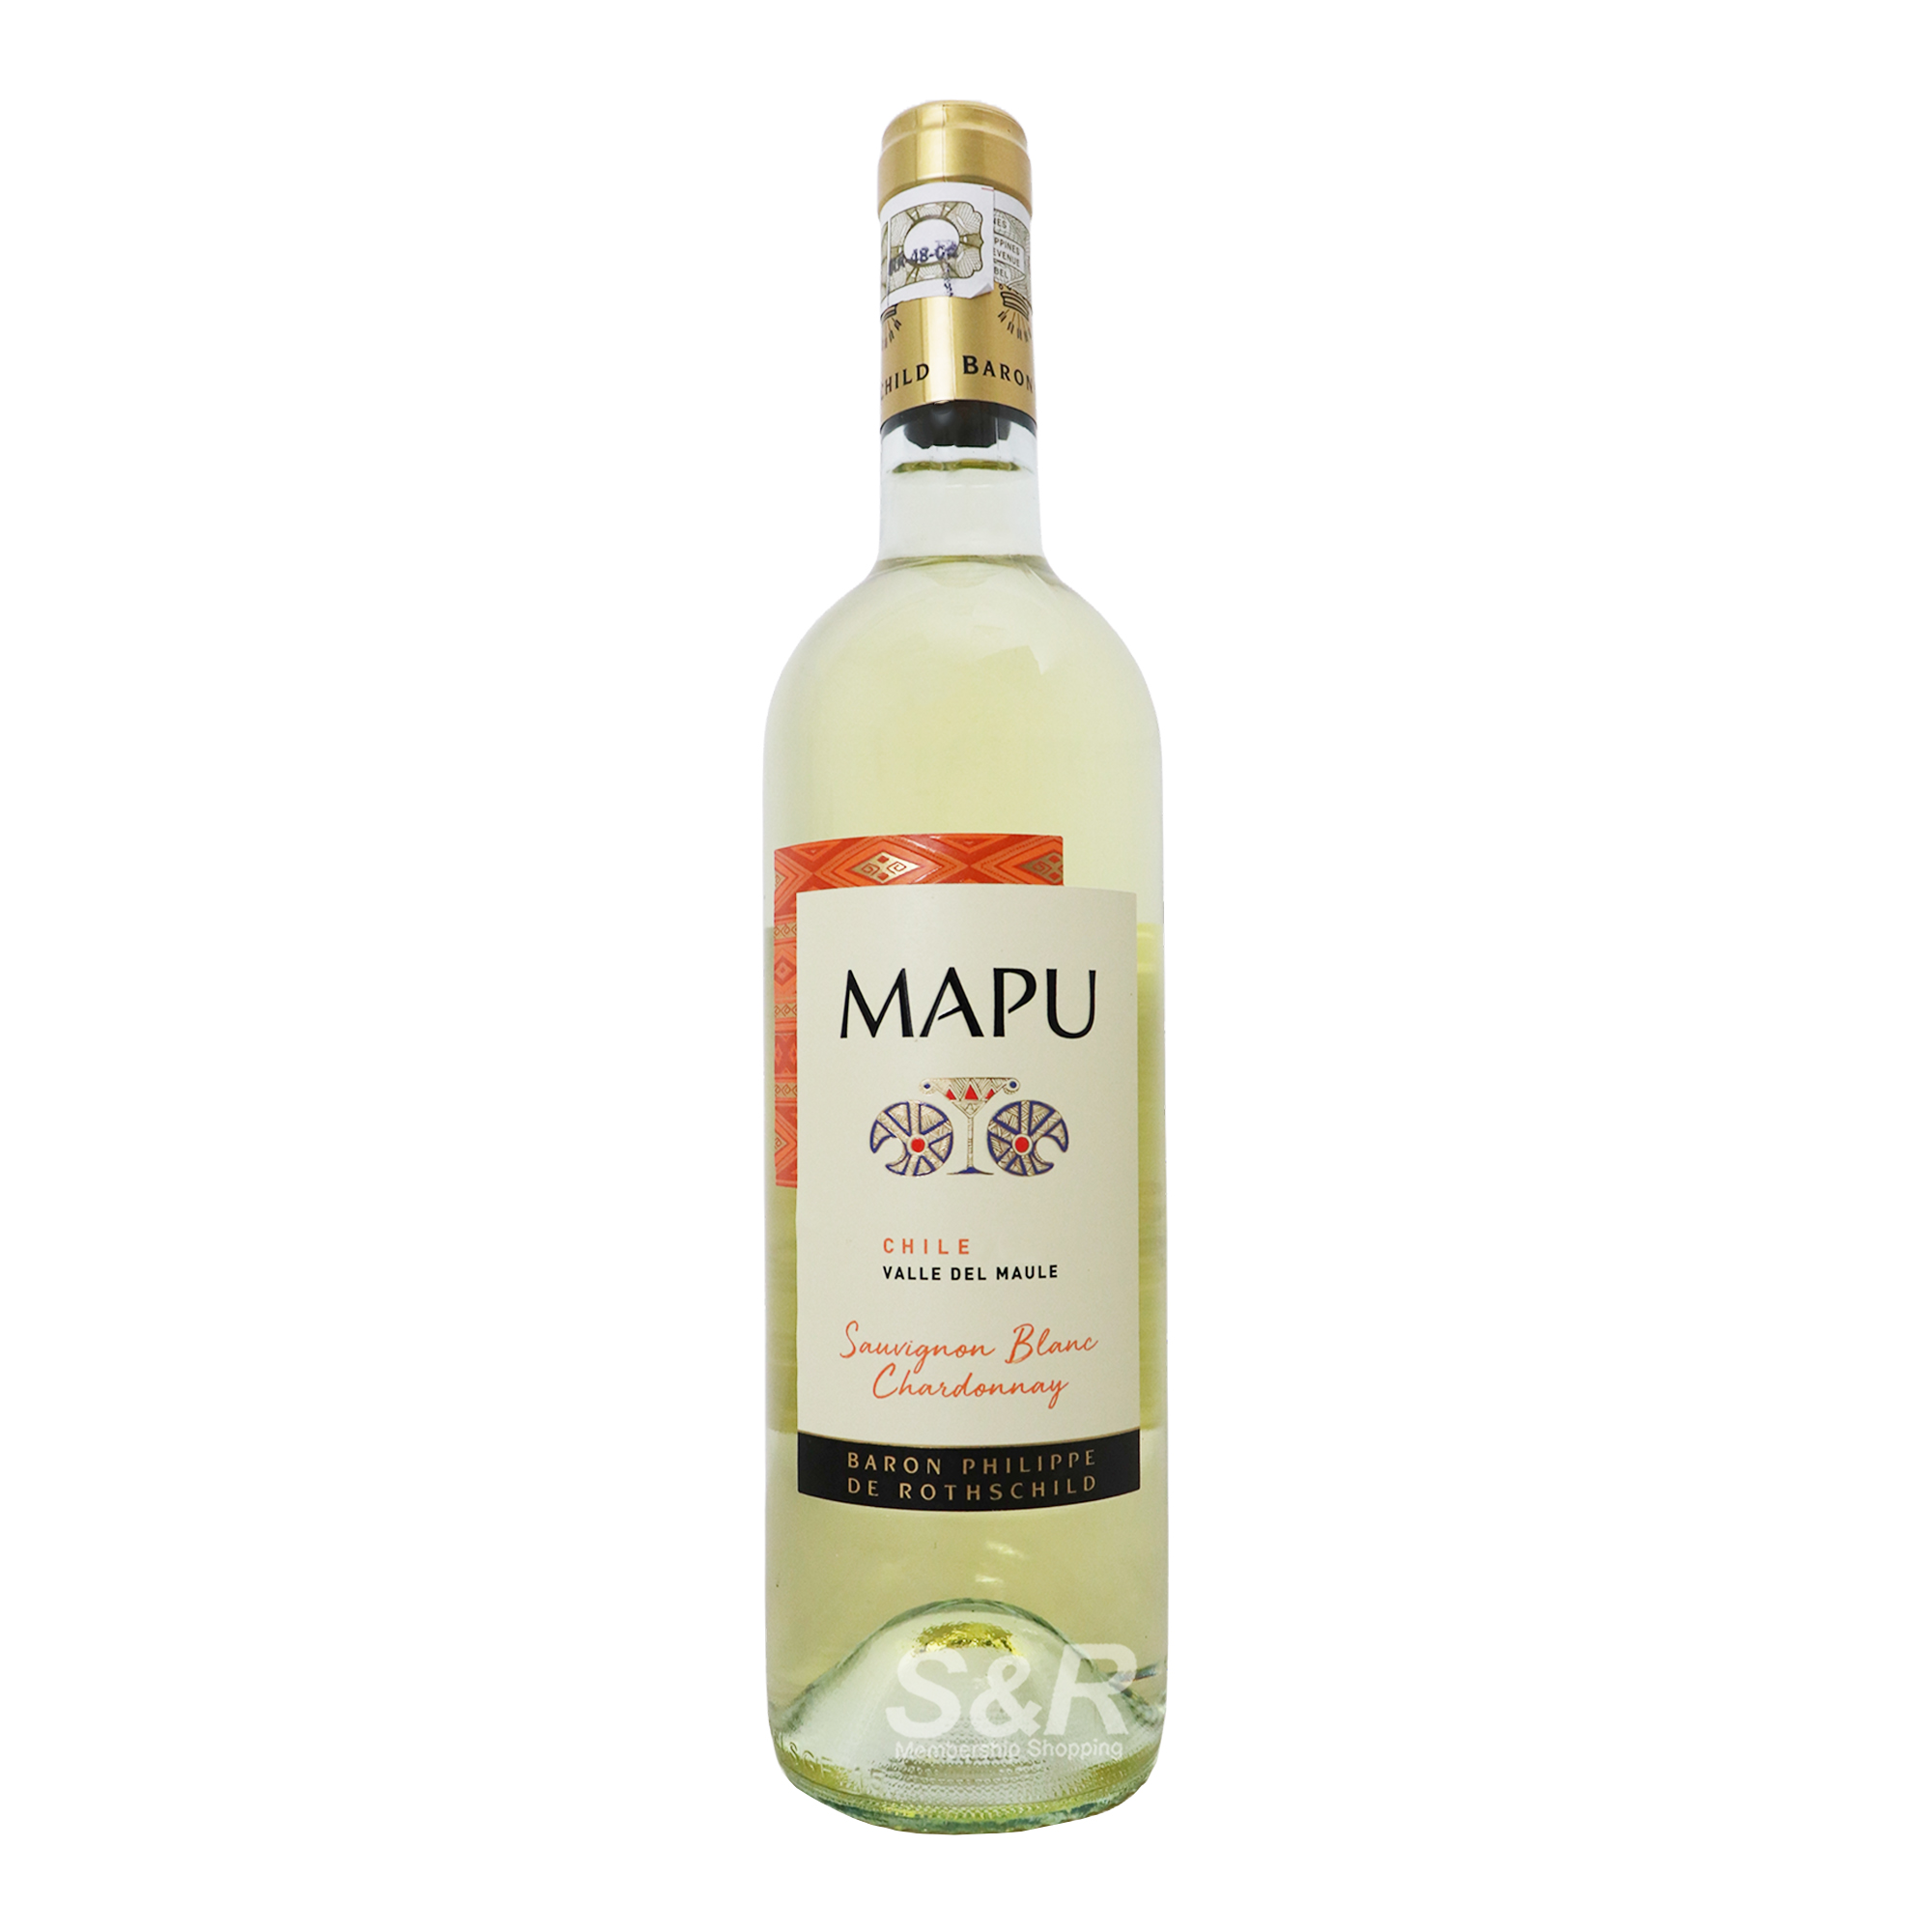 Mapu Sauvignon Blanc Chardonnay 750mL